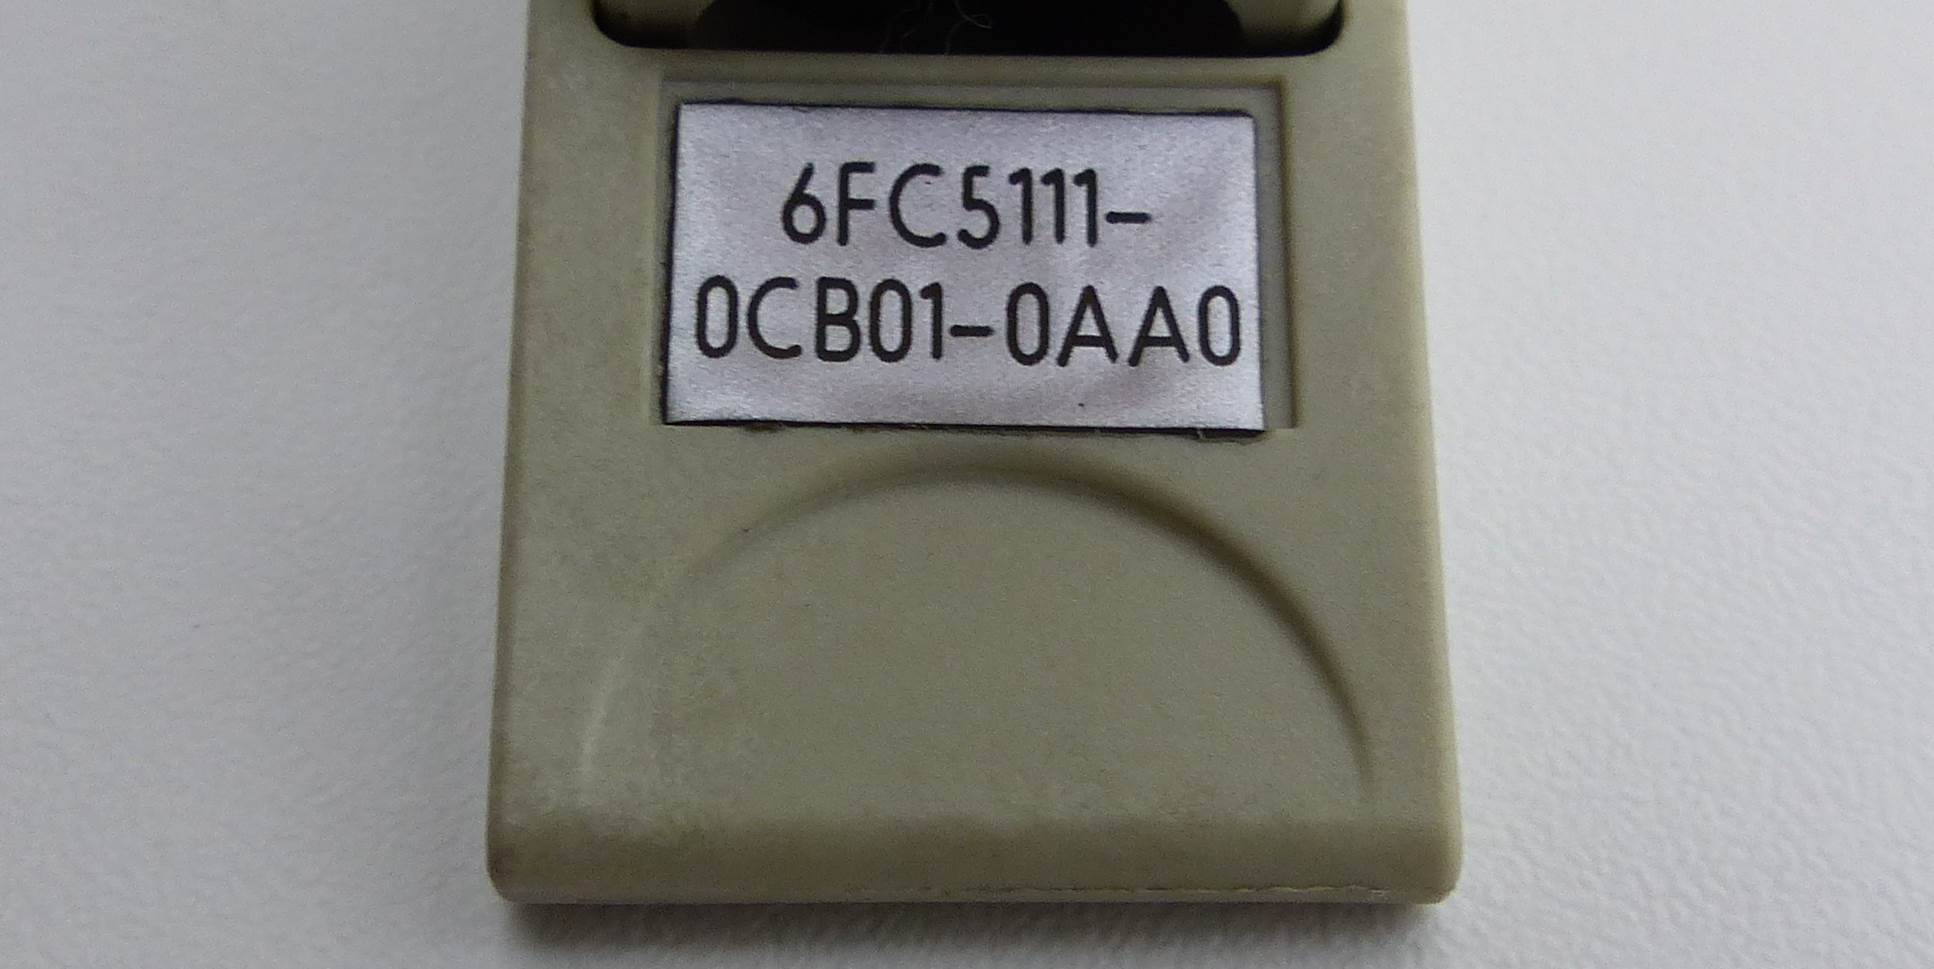 Input Card analog 6FC5111-0CB01-0AA0 